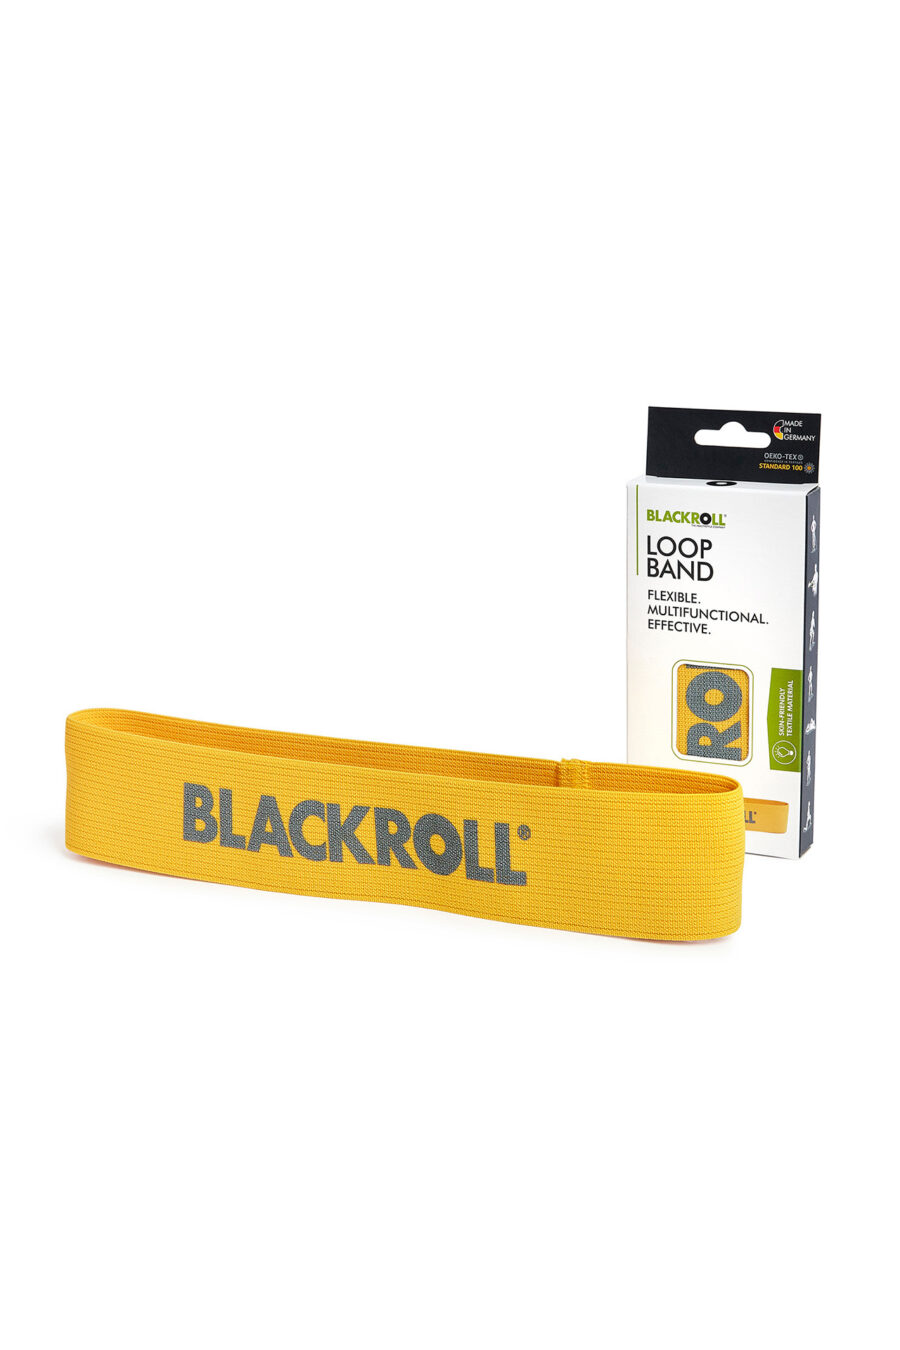 blackroll loop band yellow training fengbao shop 1080 wien